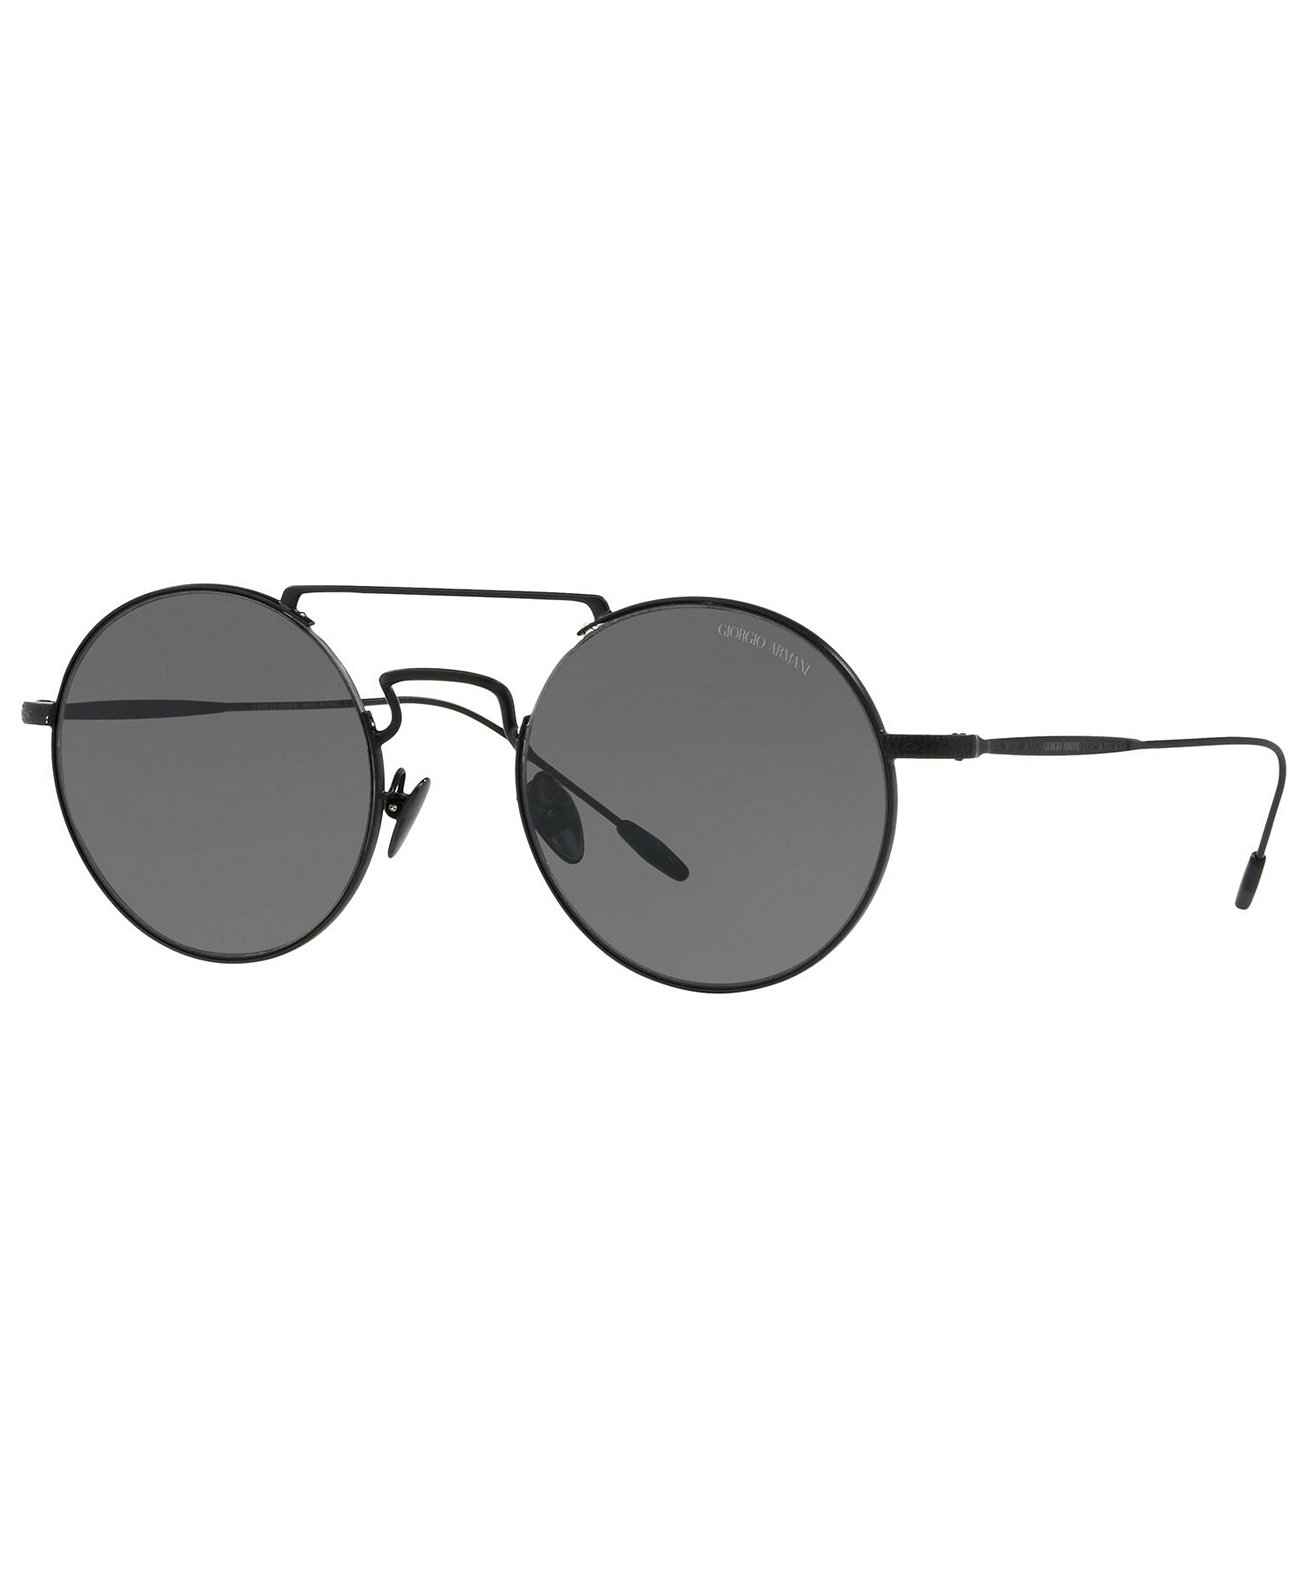 Мужские солнцезащитные очки Emporio Armani, 0AR6072 Giorgio Armani